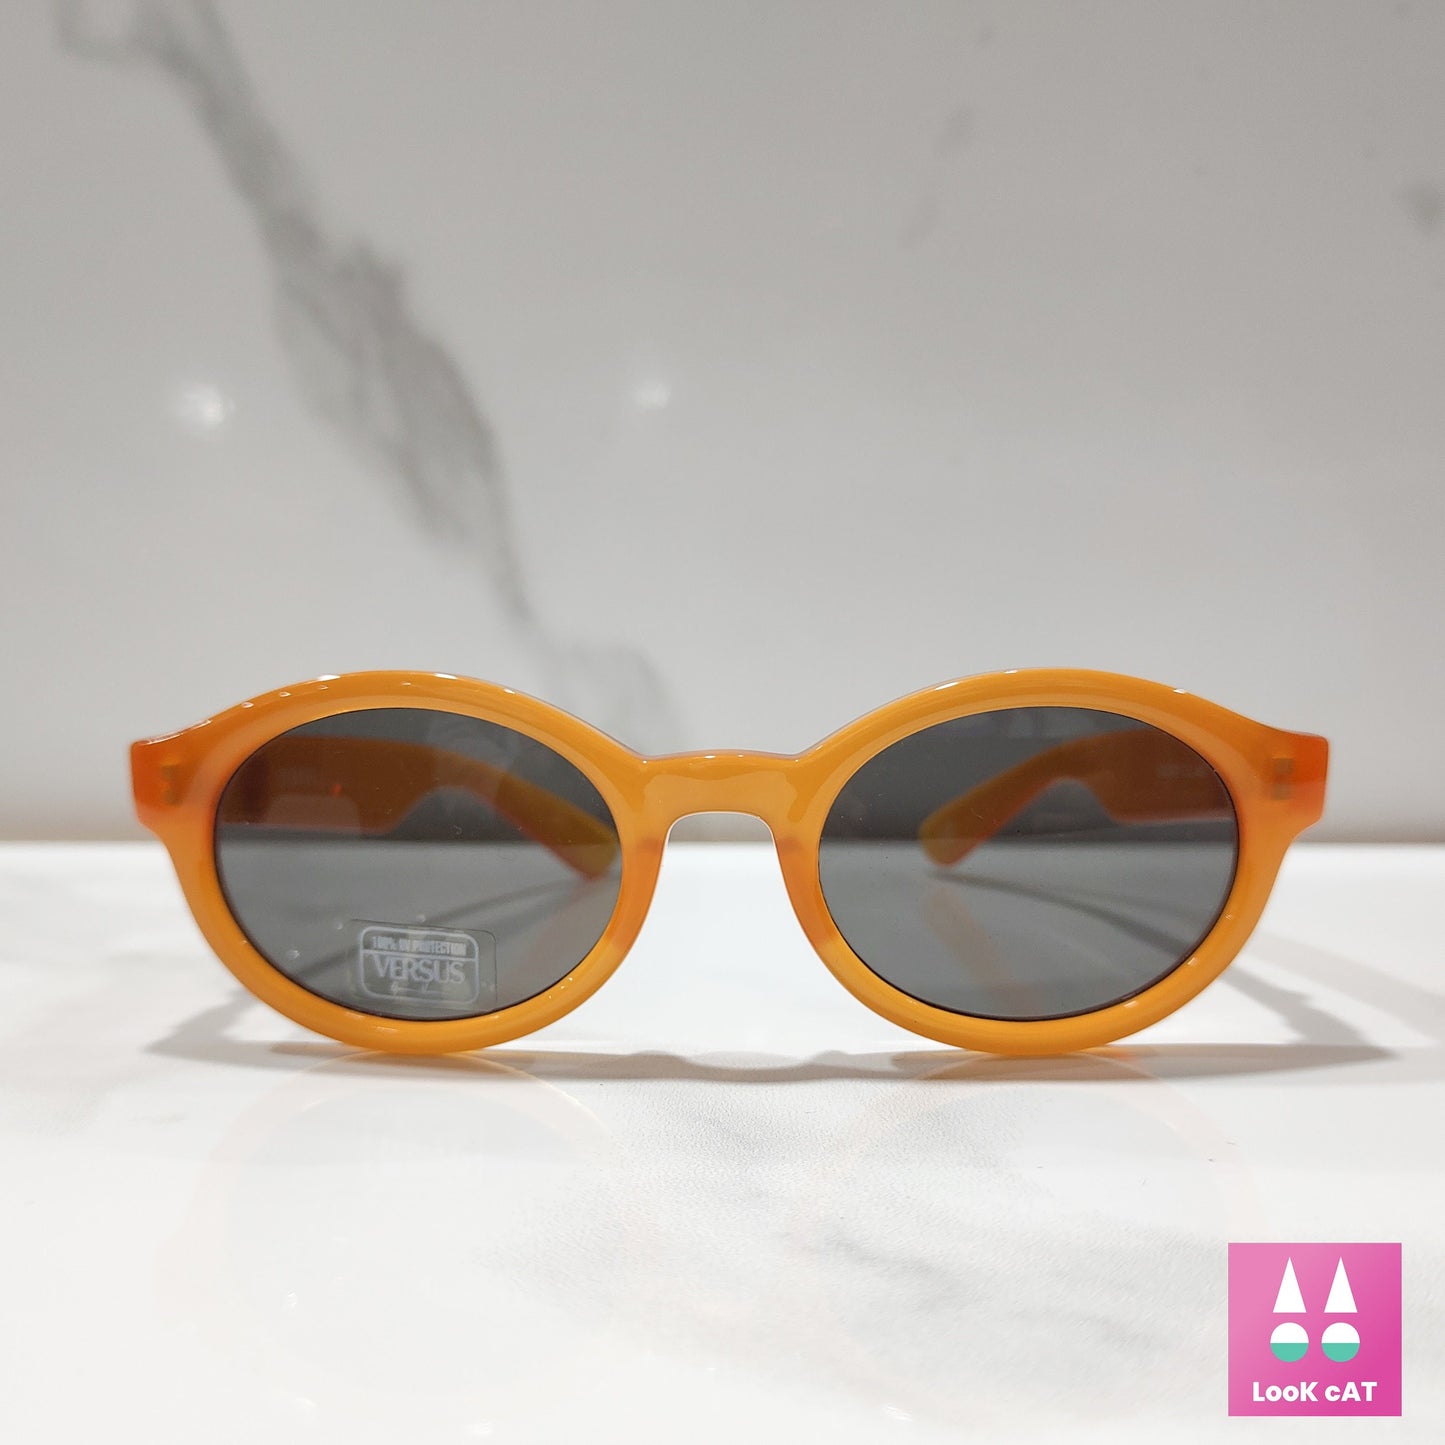 Versus Gianni Versace mod EF 9 brille lunette 太阳镜 Summer medusa vintage